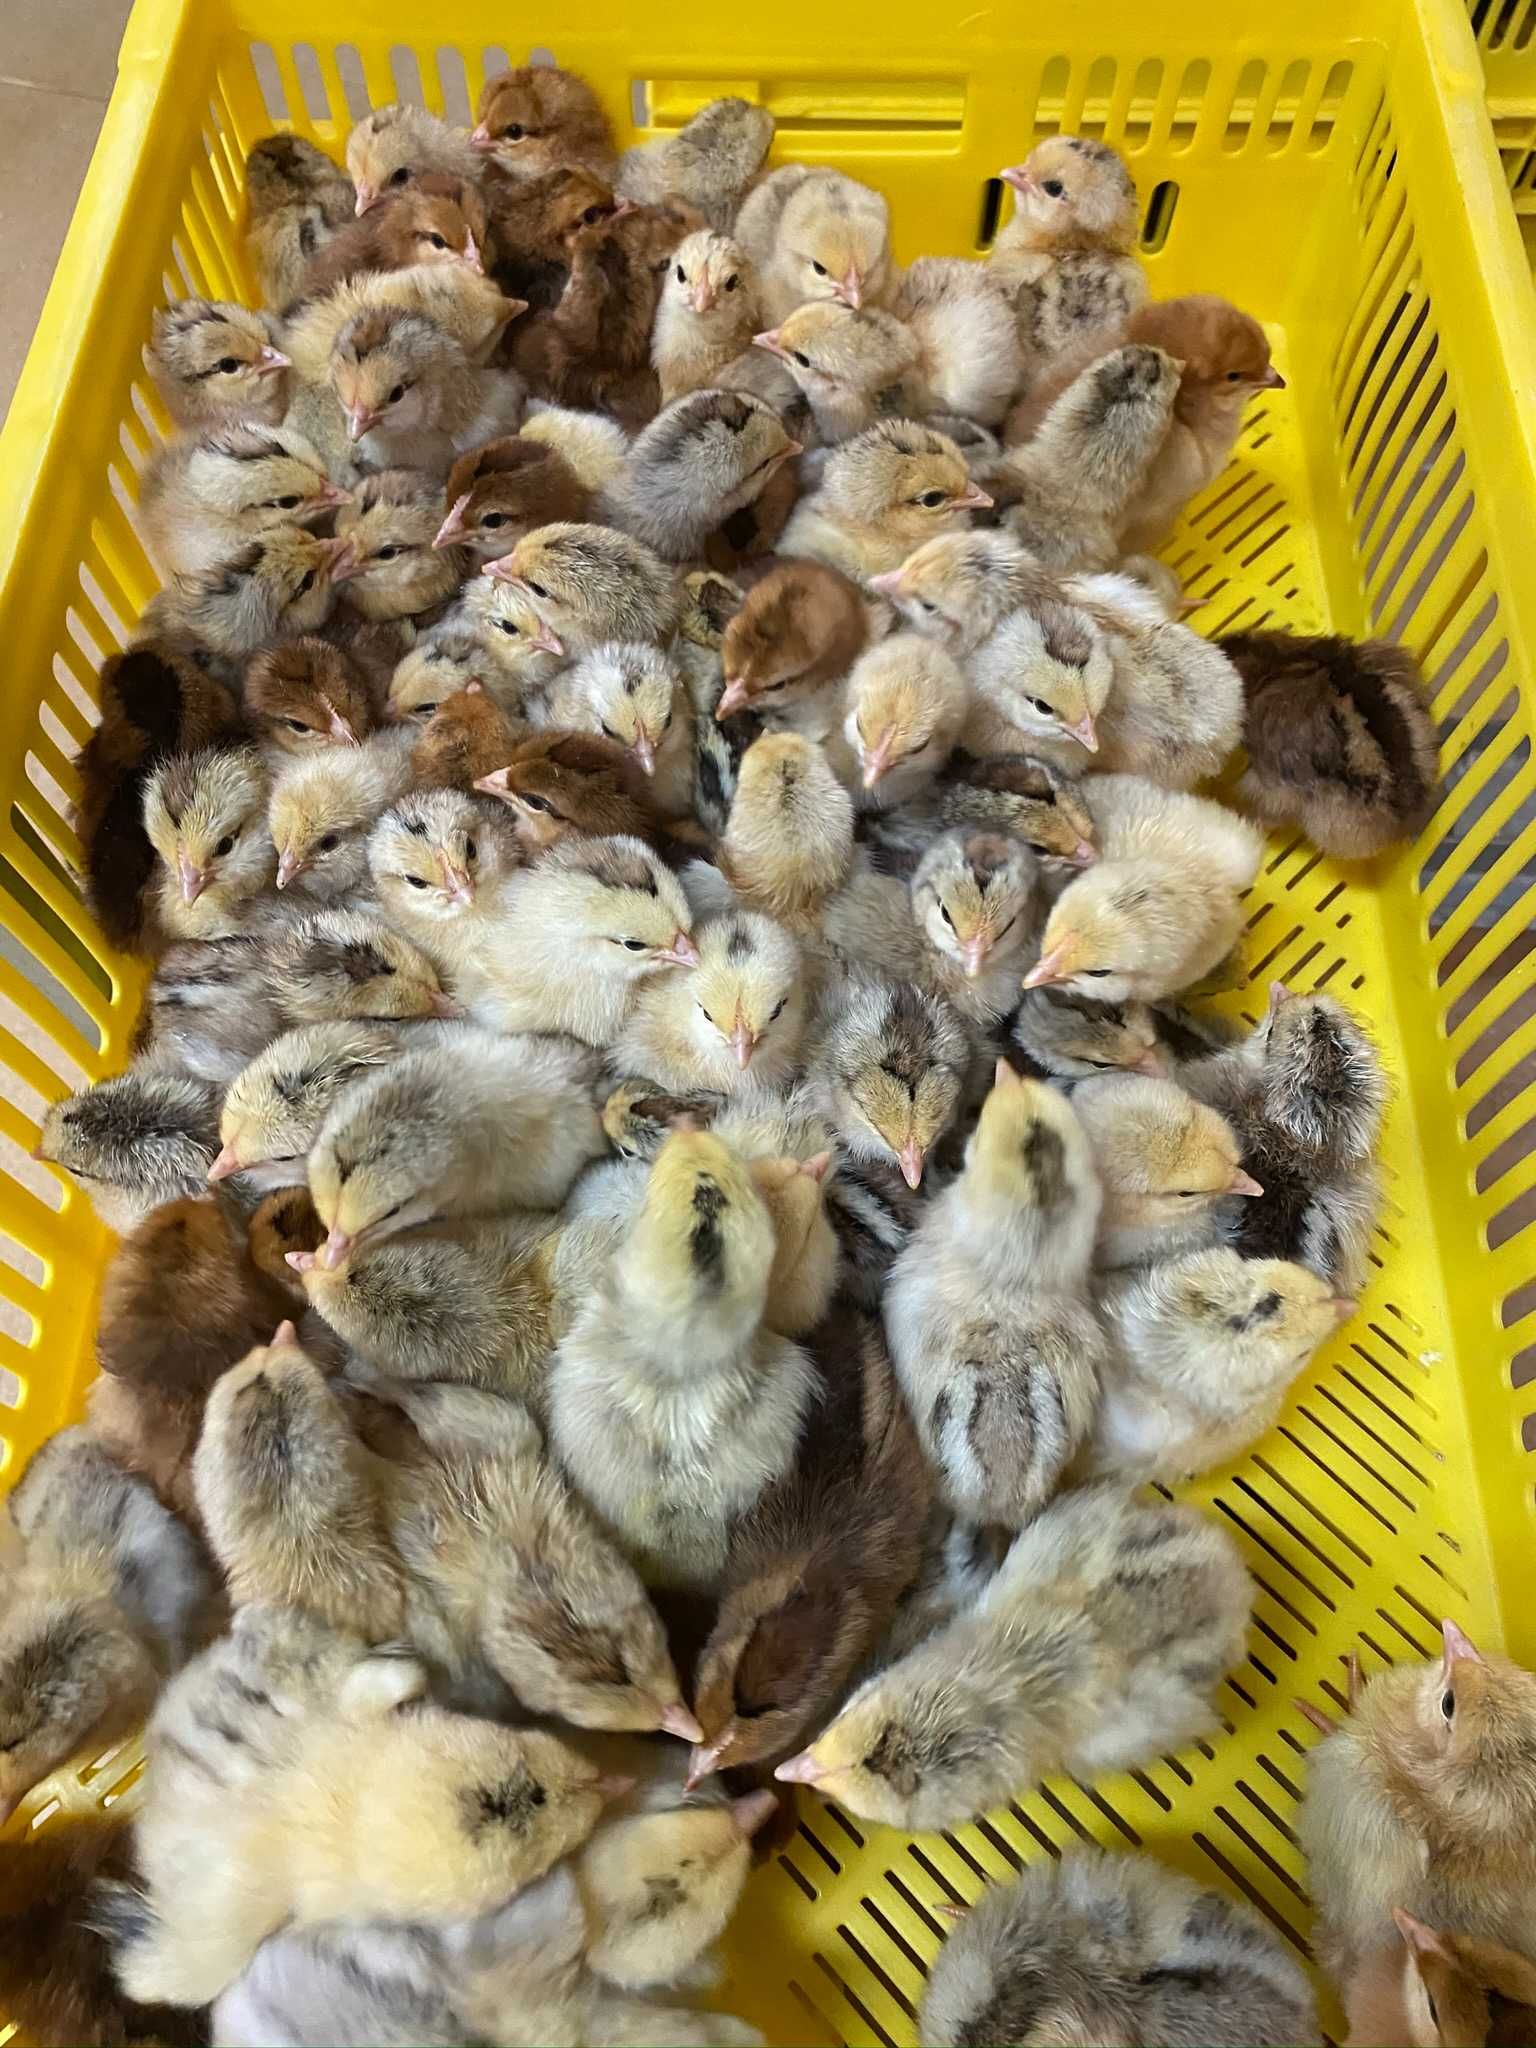 Kurczaki pisklęta nioski, mięsne, Leghorn, Greenshell, Sussex, Rosa